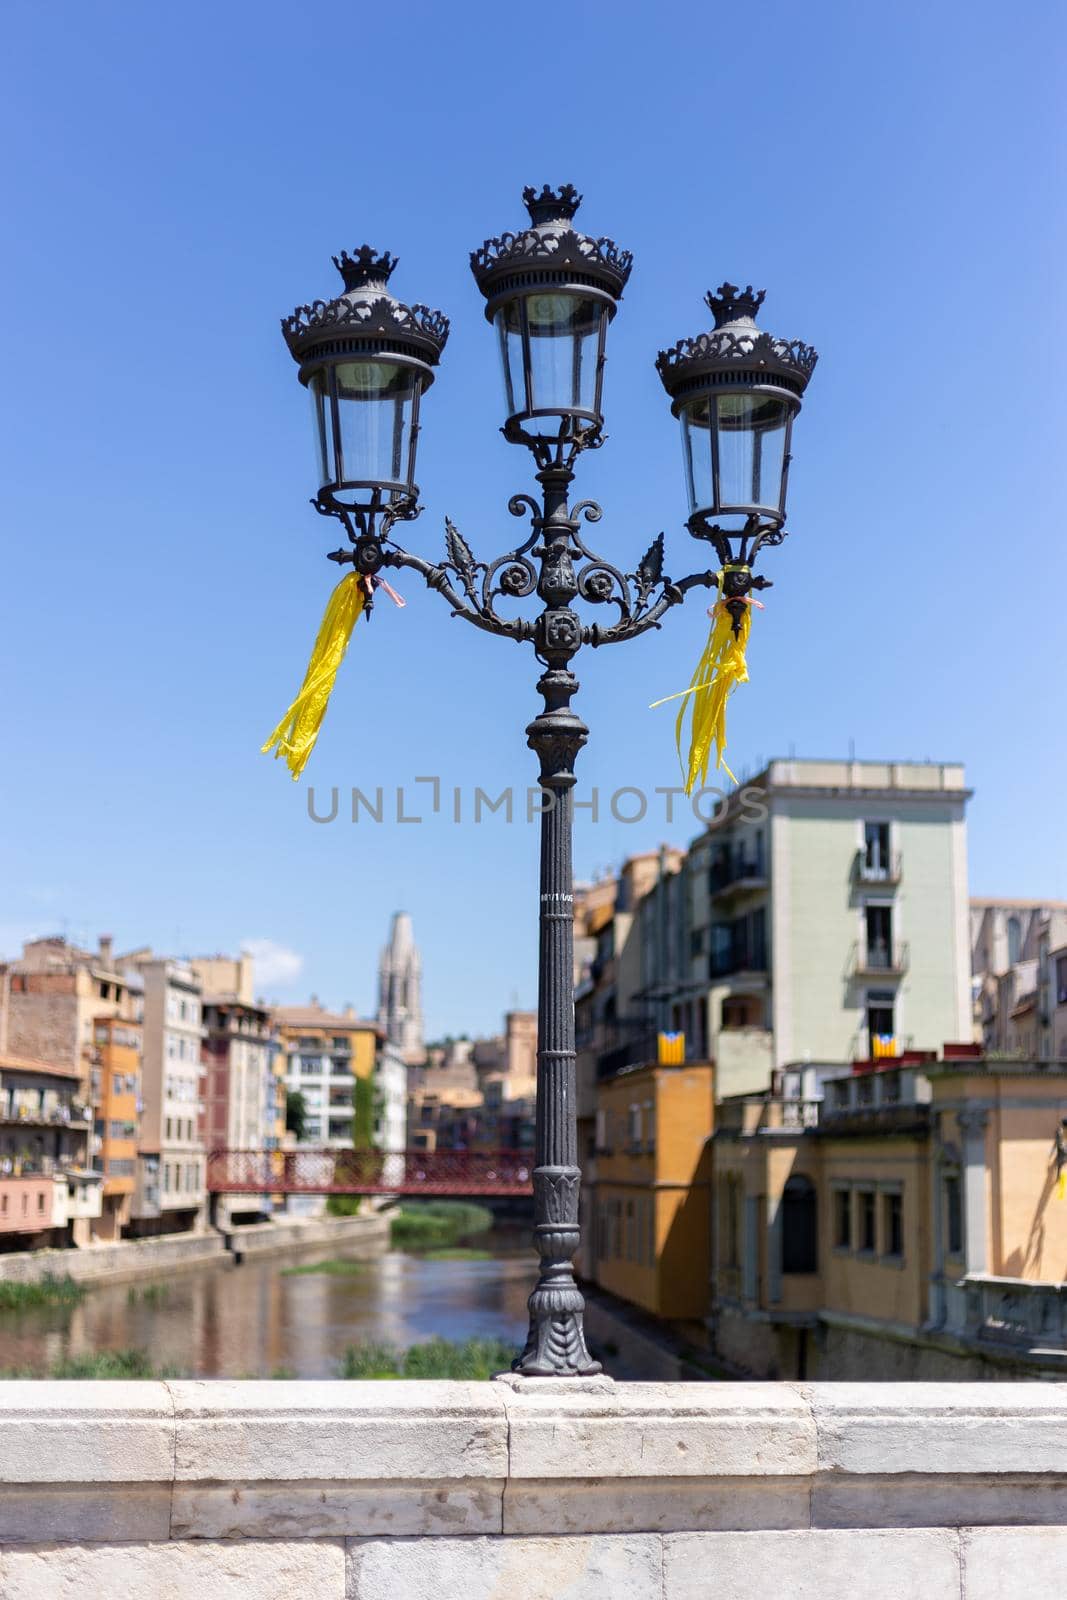 Ornate street lamp in the Spanish city of Girona by Digoarpi